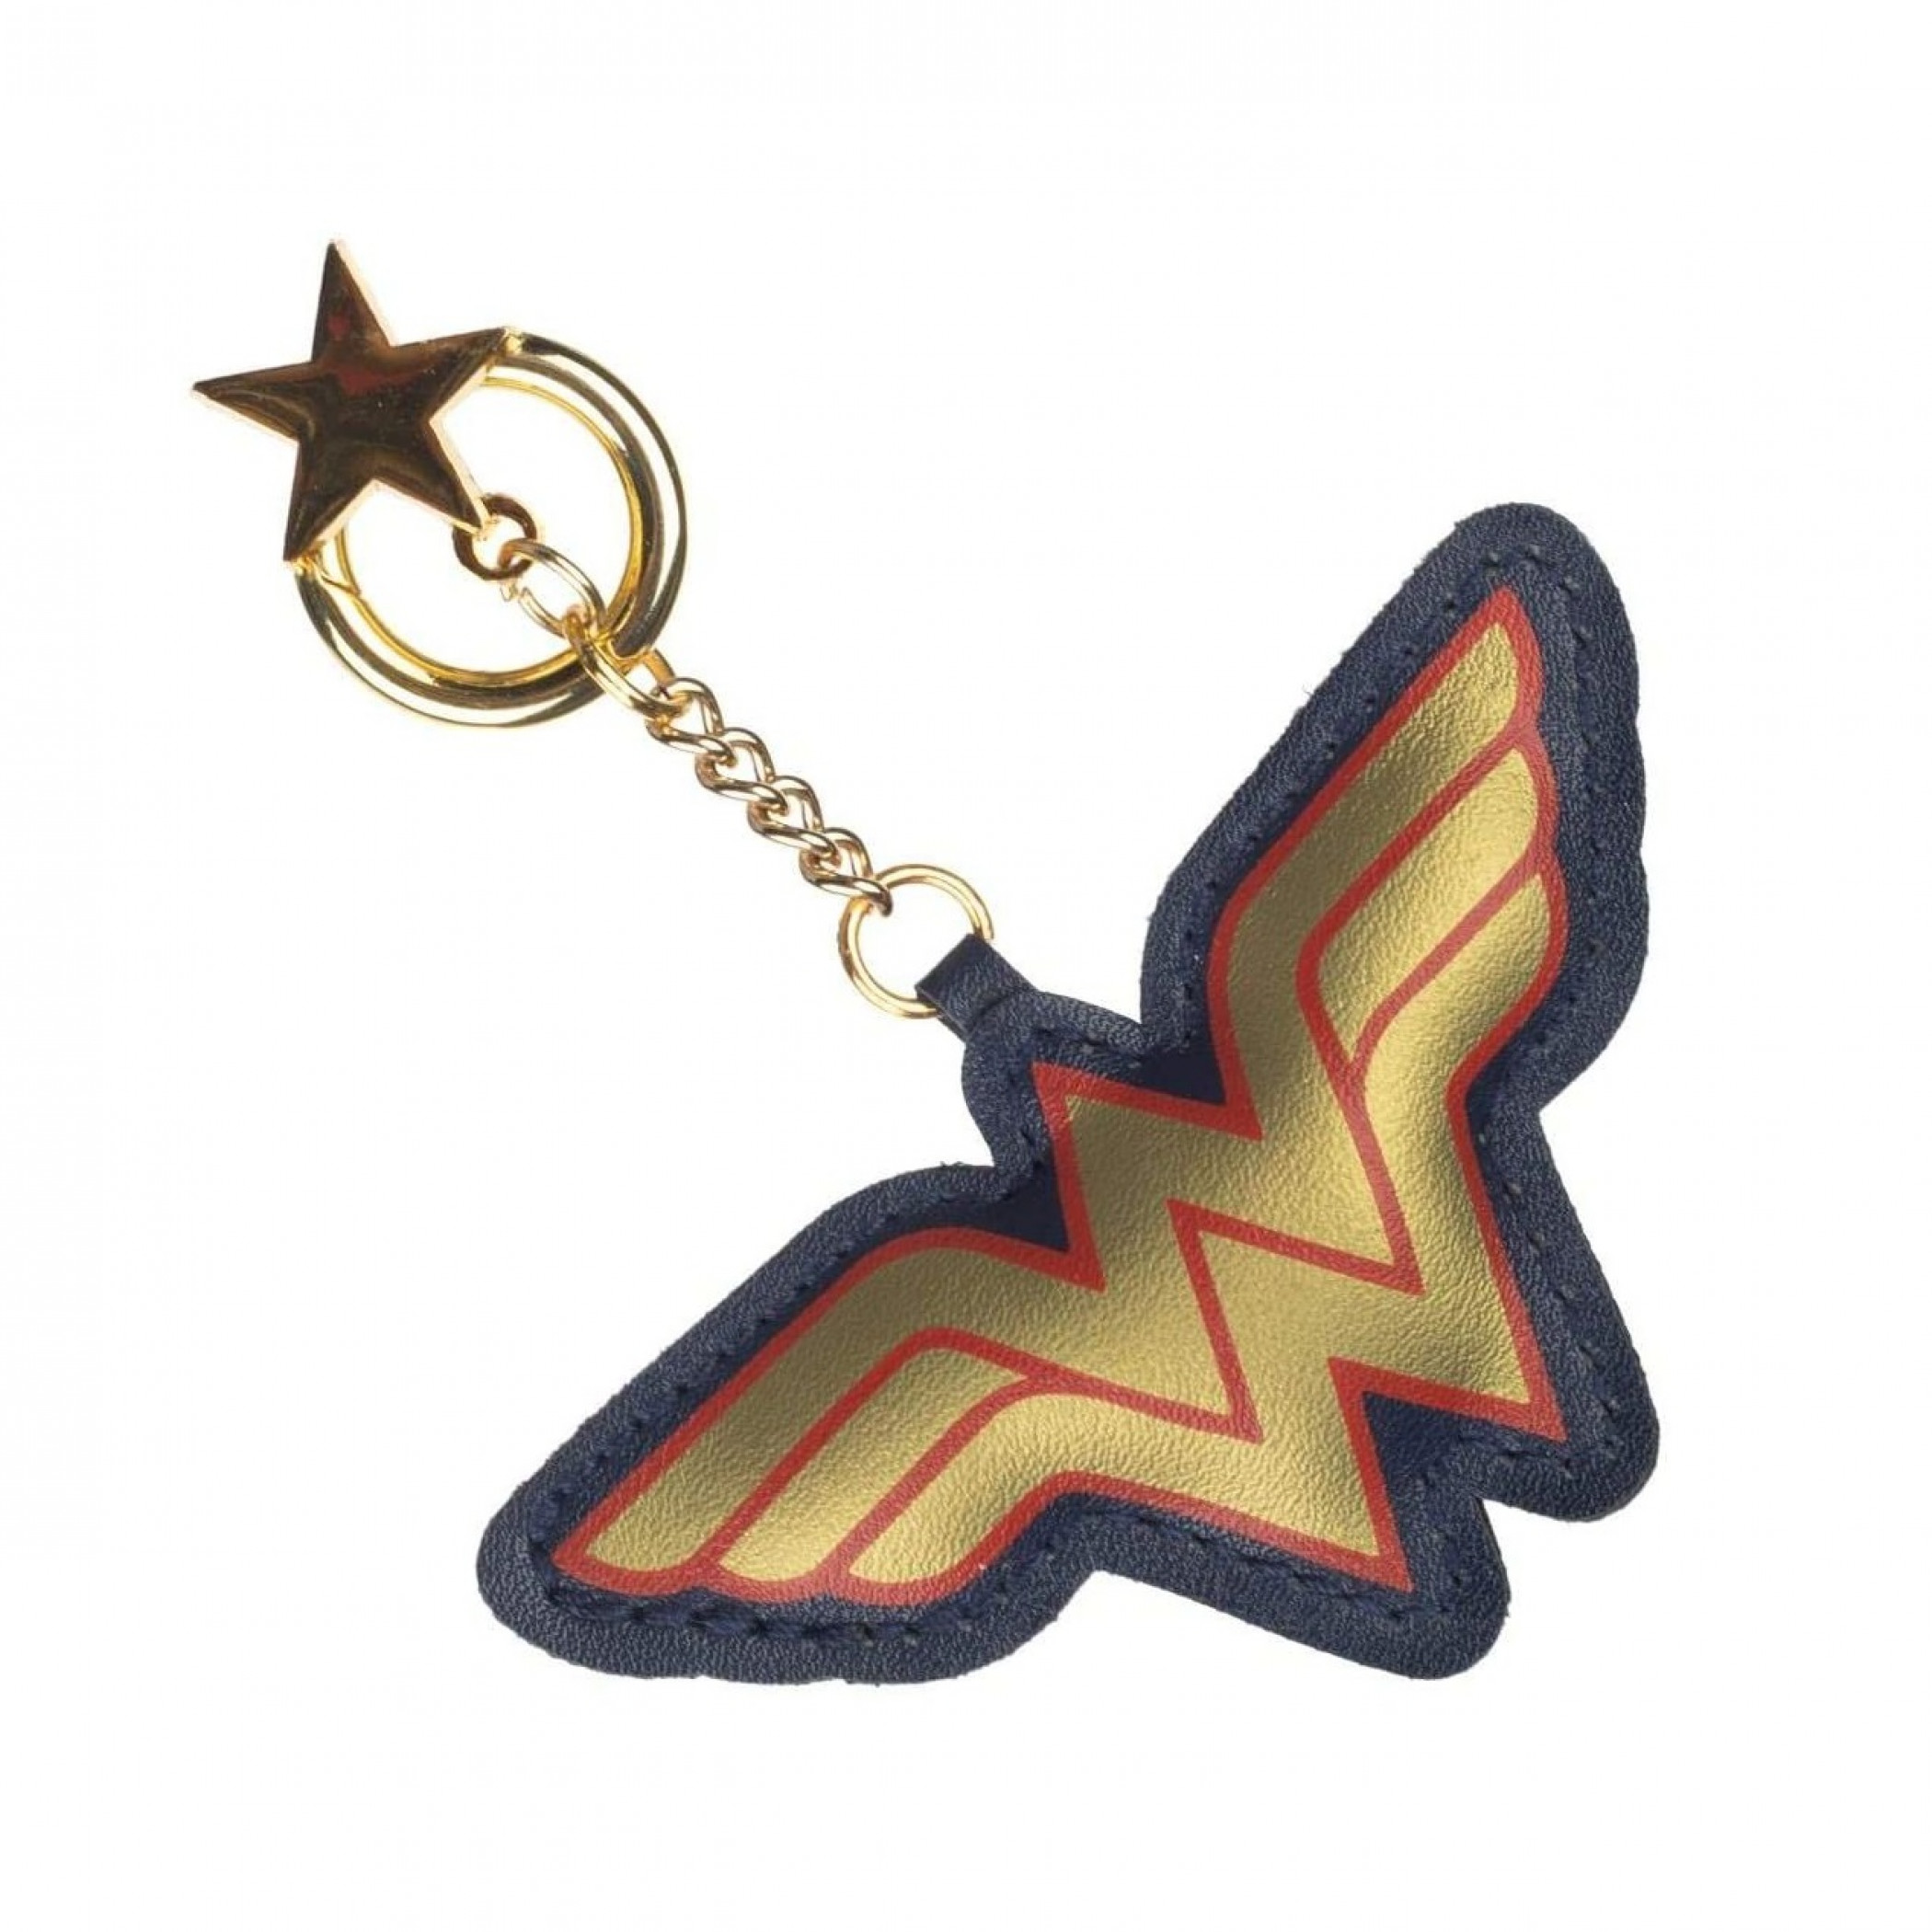 Wonder Woman Symbol and Charm Keychain